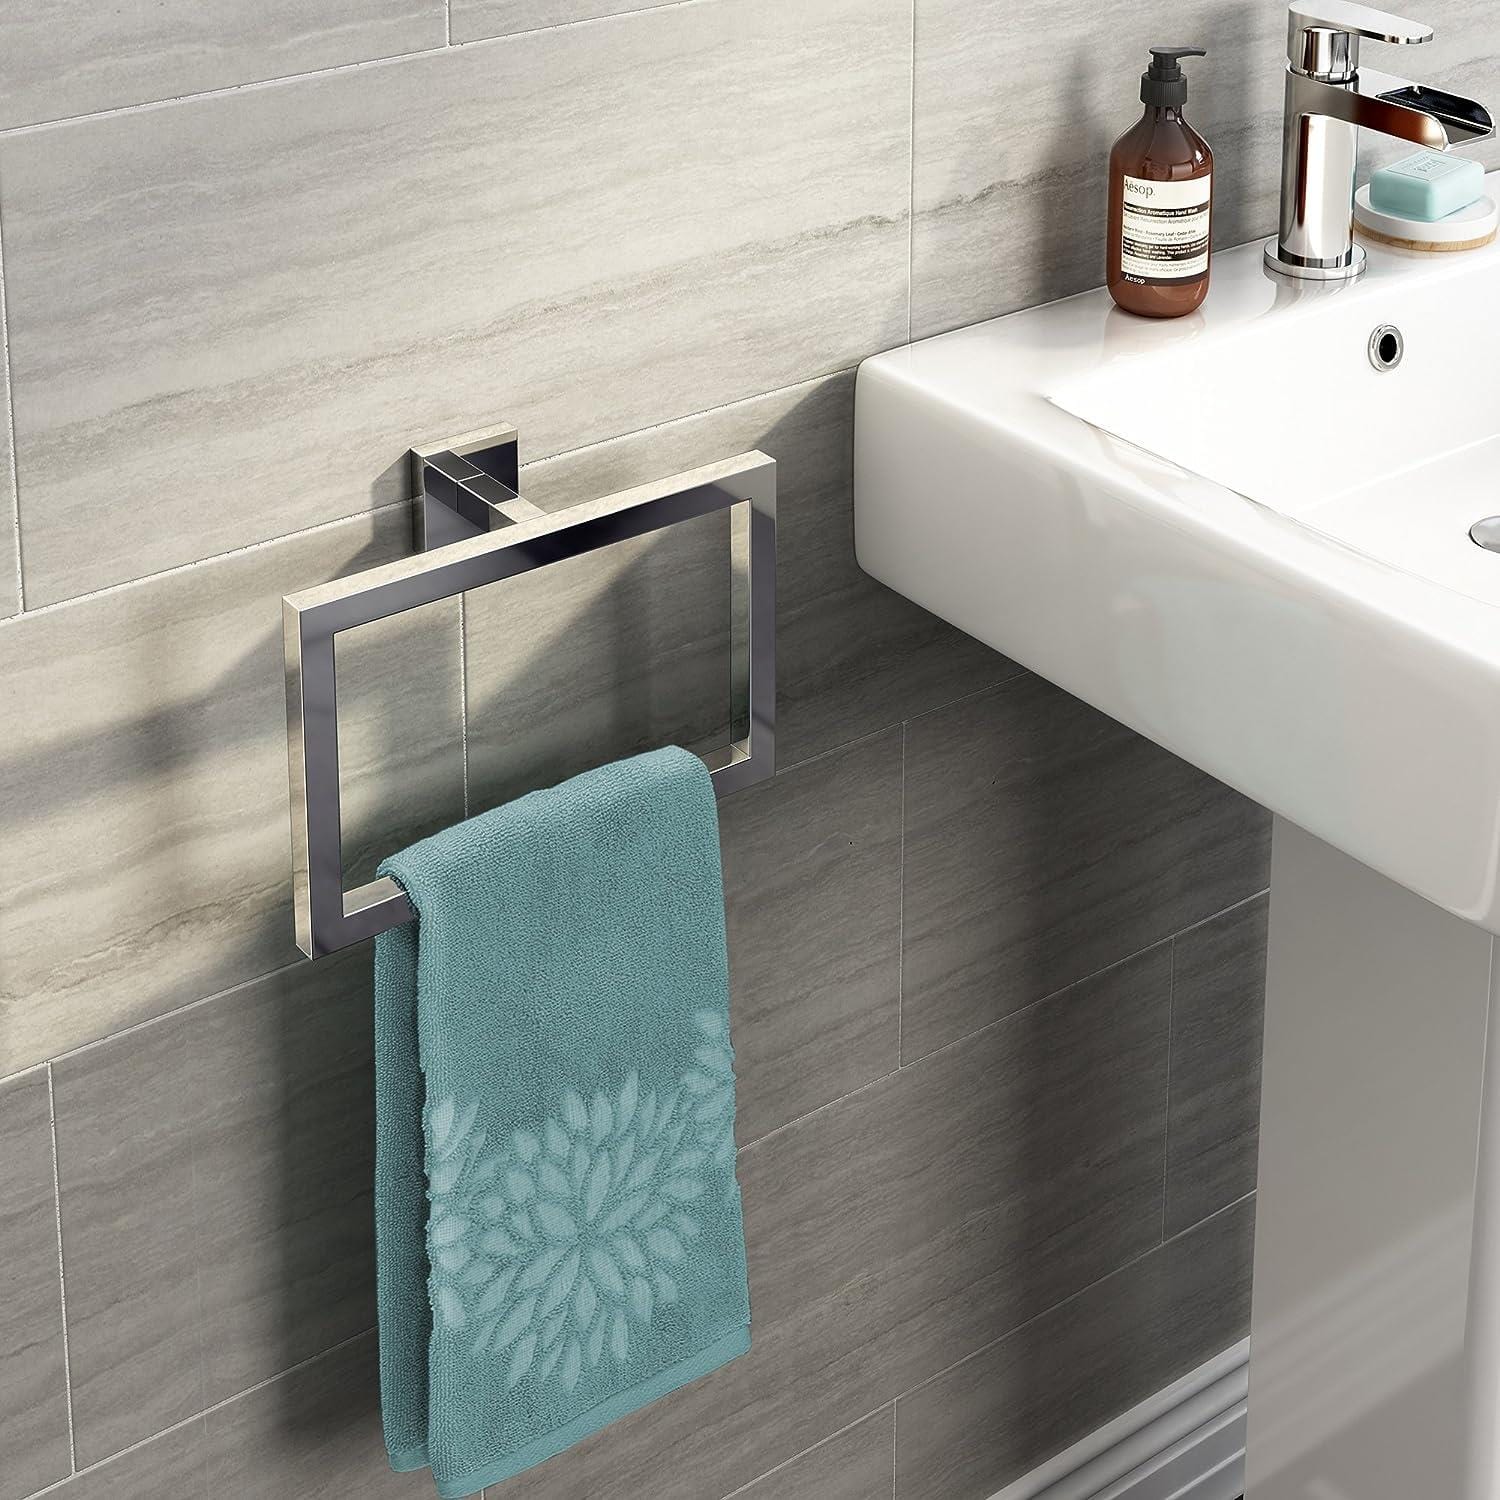 iBathUK Bathroom > Bathroom Accessories iBathUK Bathroom Towel Ring Holder Wall Mounted Square Bathroom Accessory